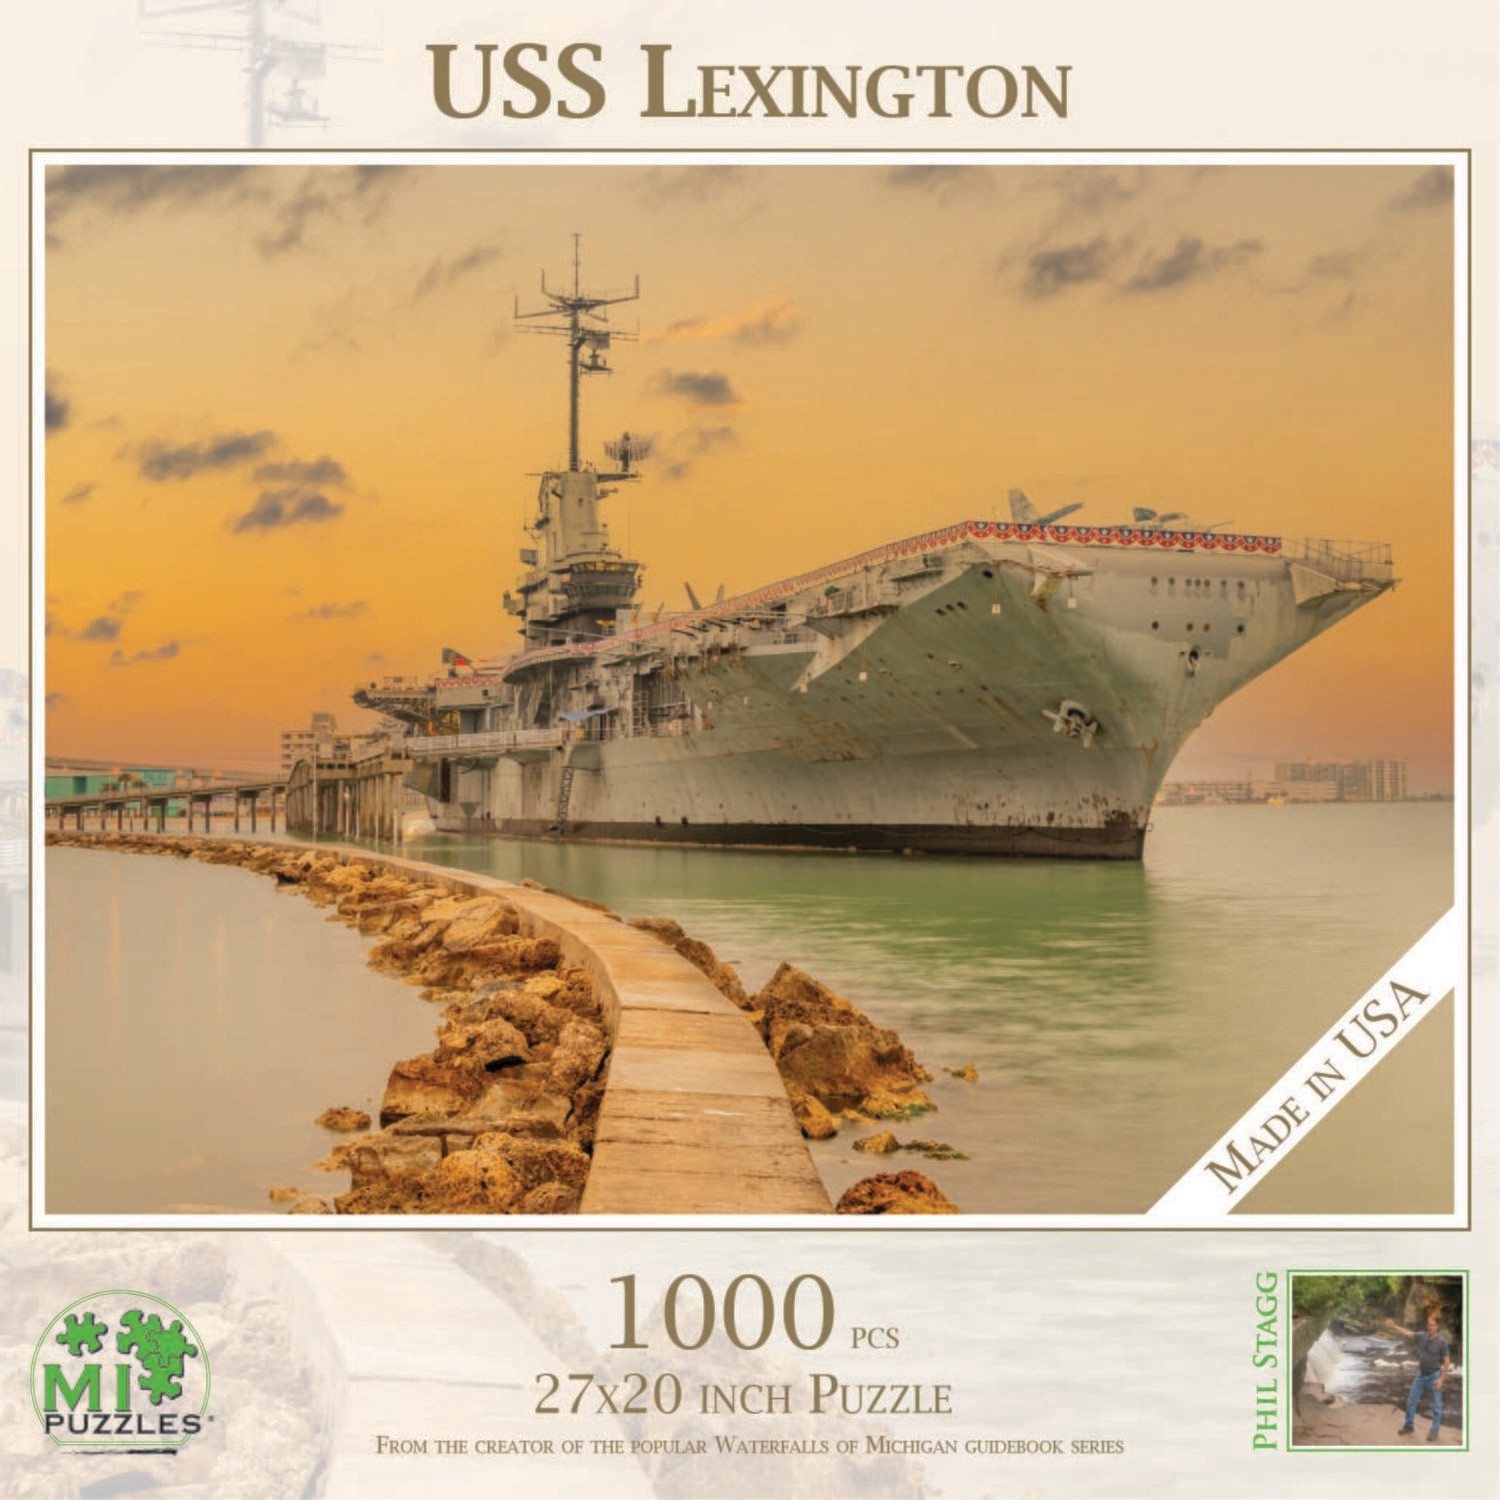 USS LEXINGTON